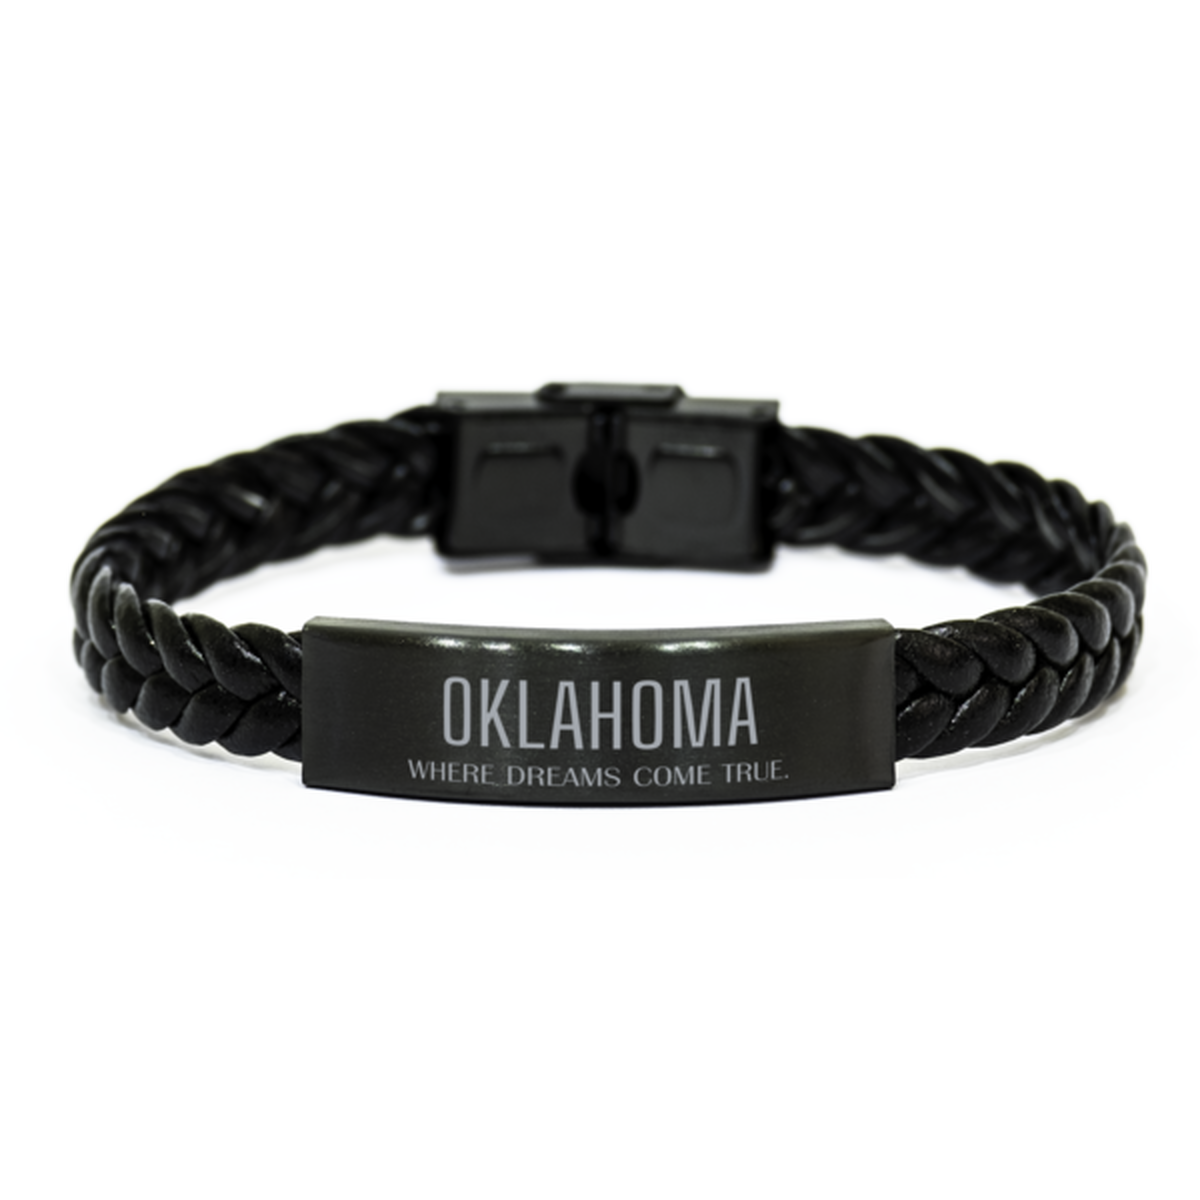 Love Oklahoma State Braided Leather Bracelet, Oklahoma Where dreams come true, Birthday Inspirational Gifts For Oklahoma Men, Women, Friends